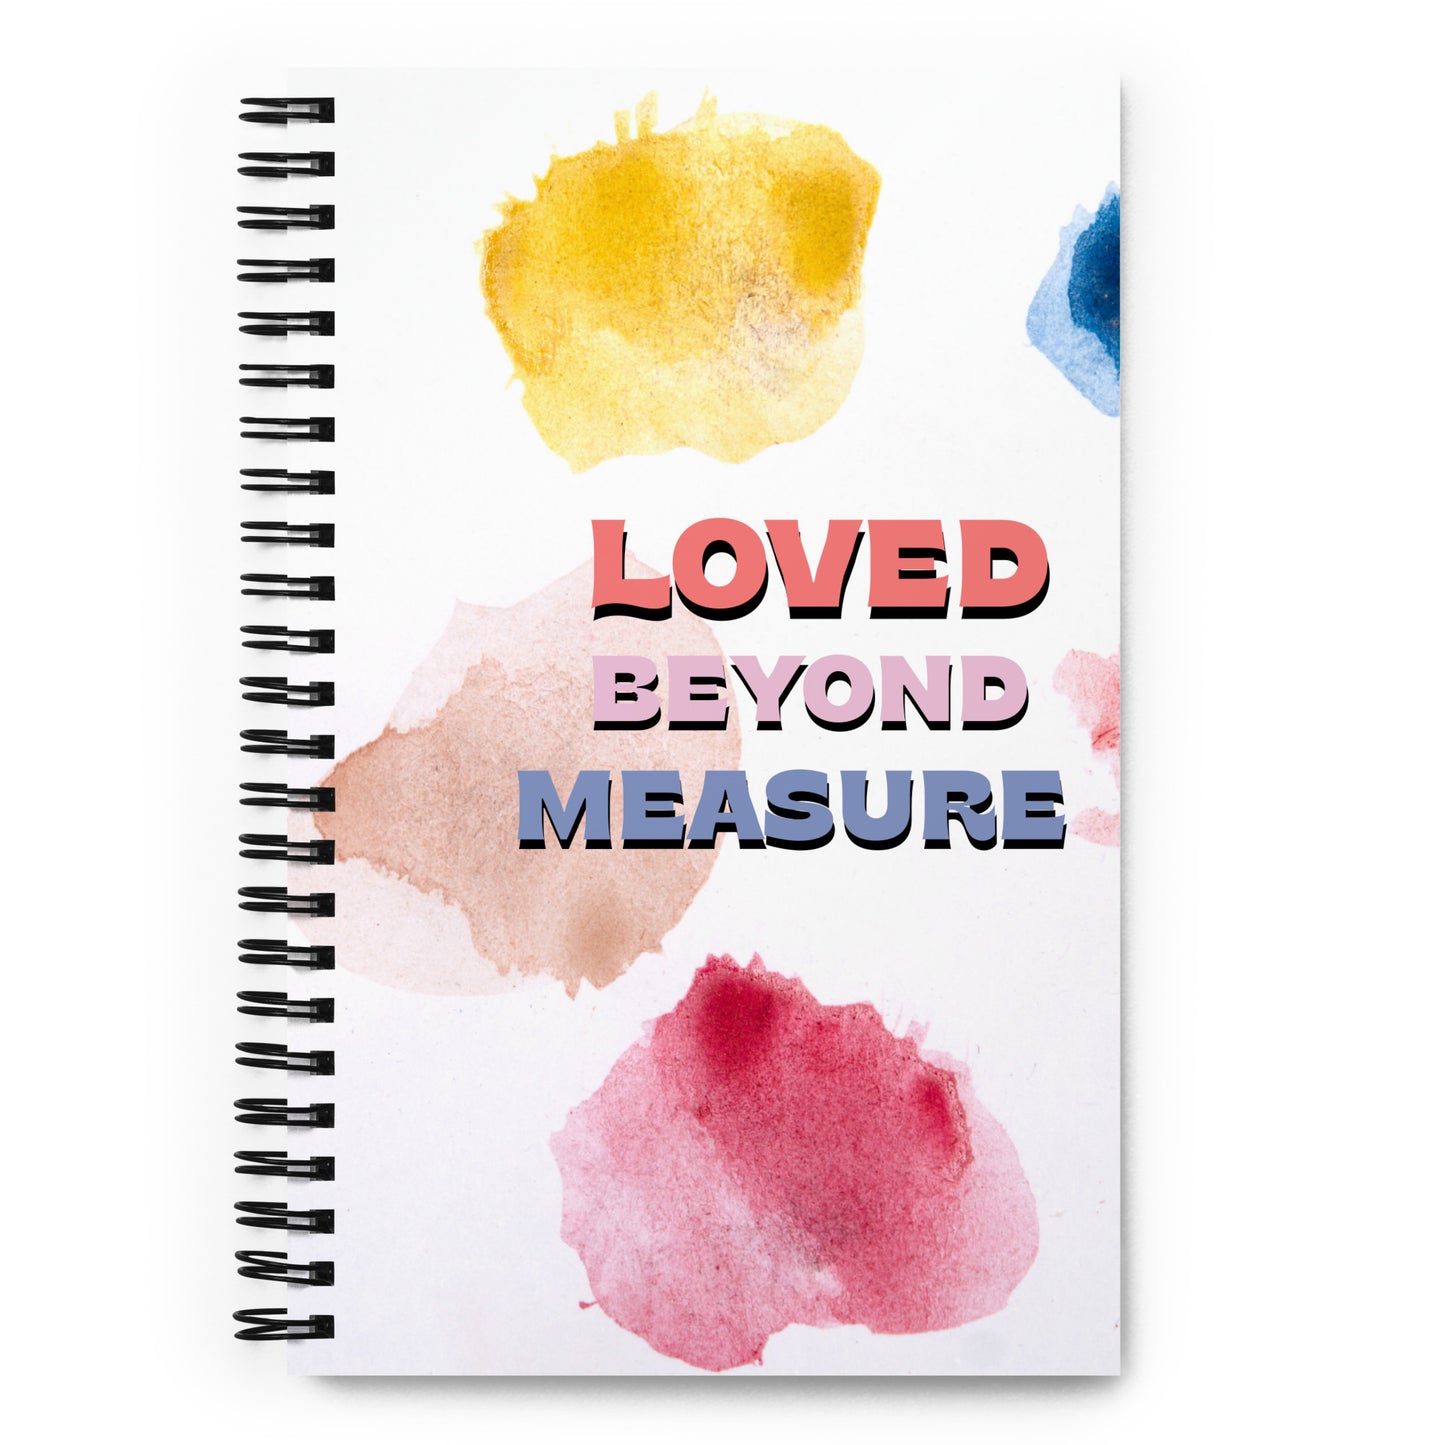 Loved Beyond Measure Spiral Notebook